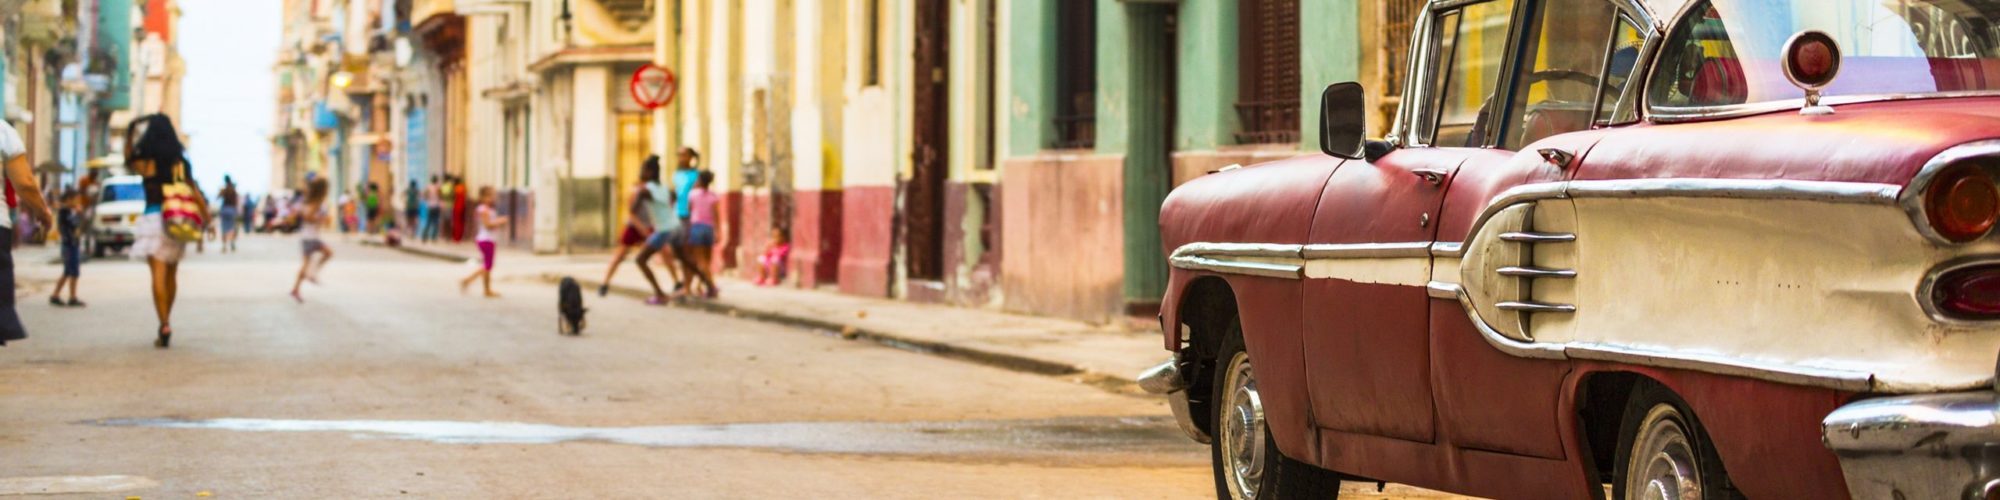 Havana Travel travel agents packages deals